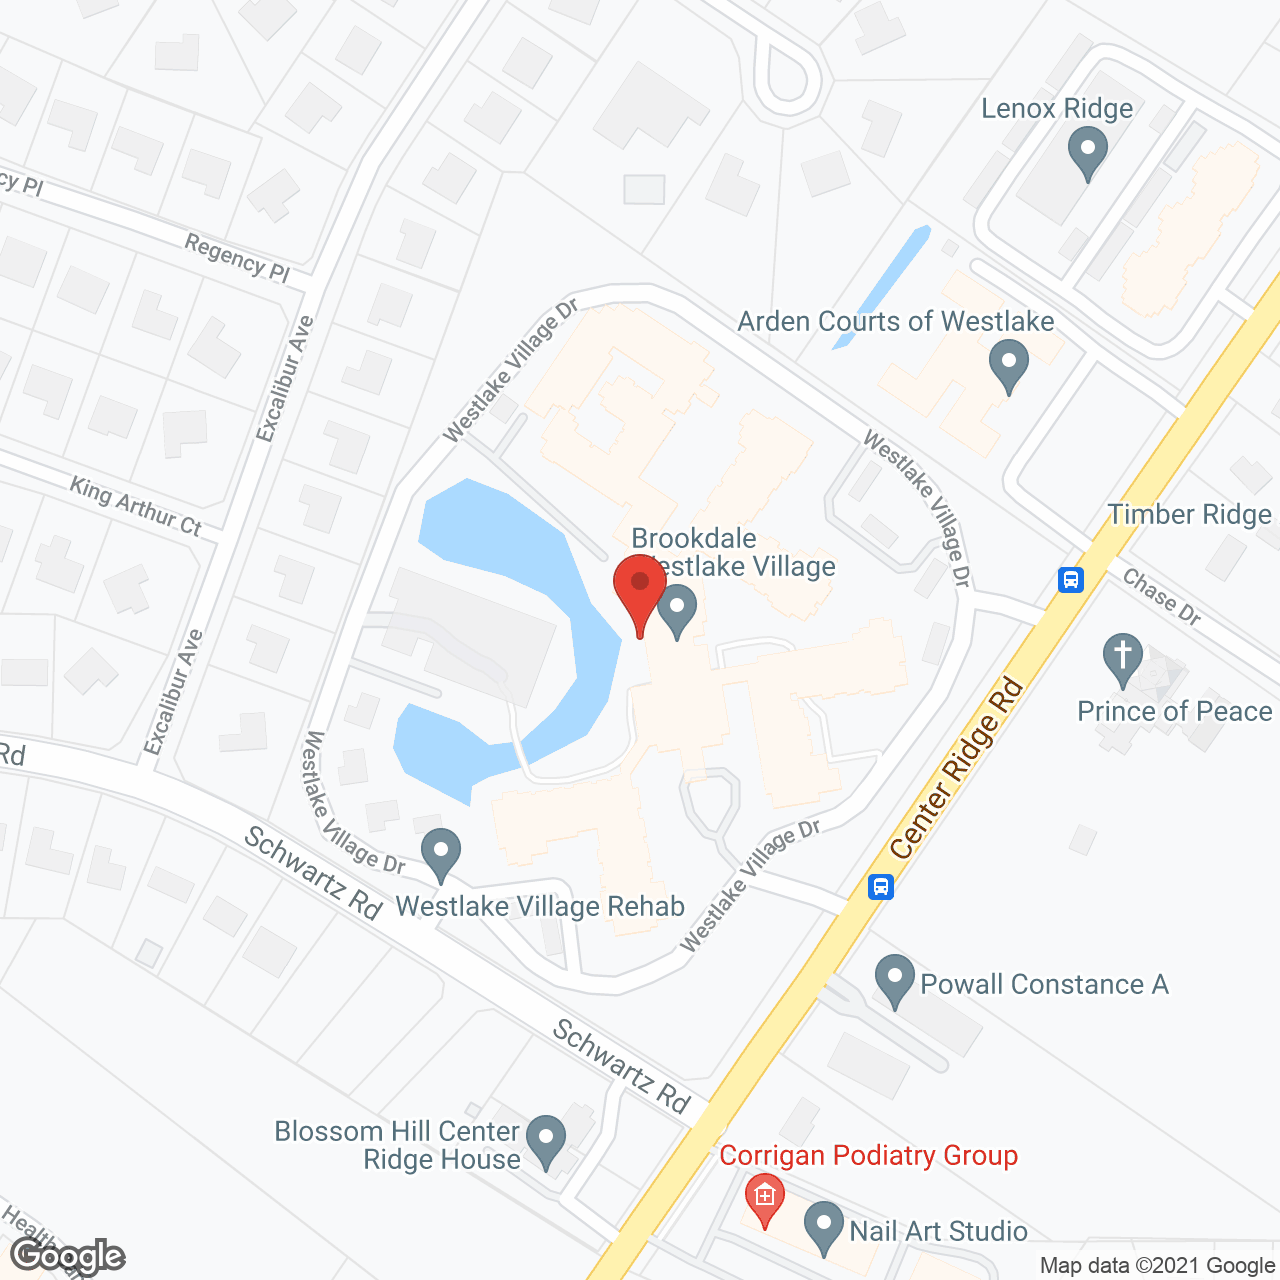 Brookdale Westlake Village in google map